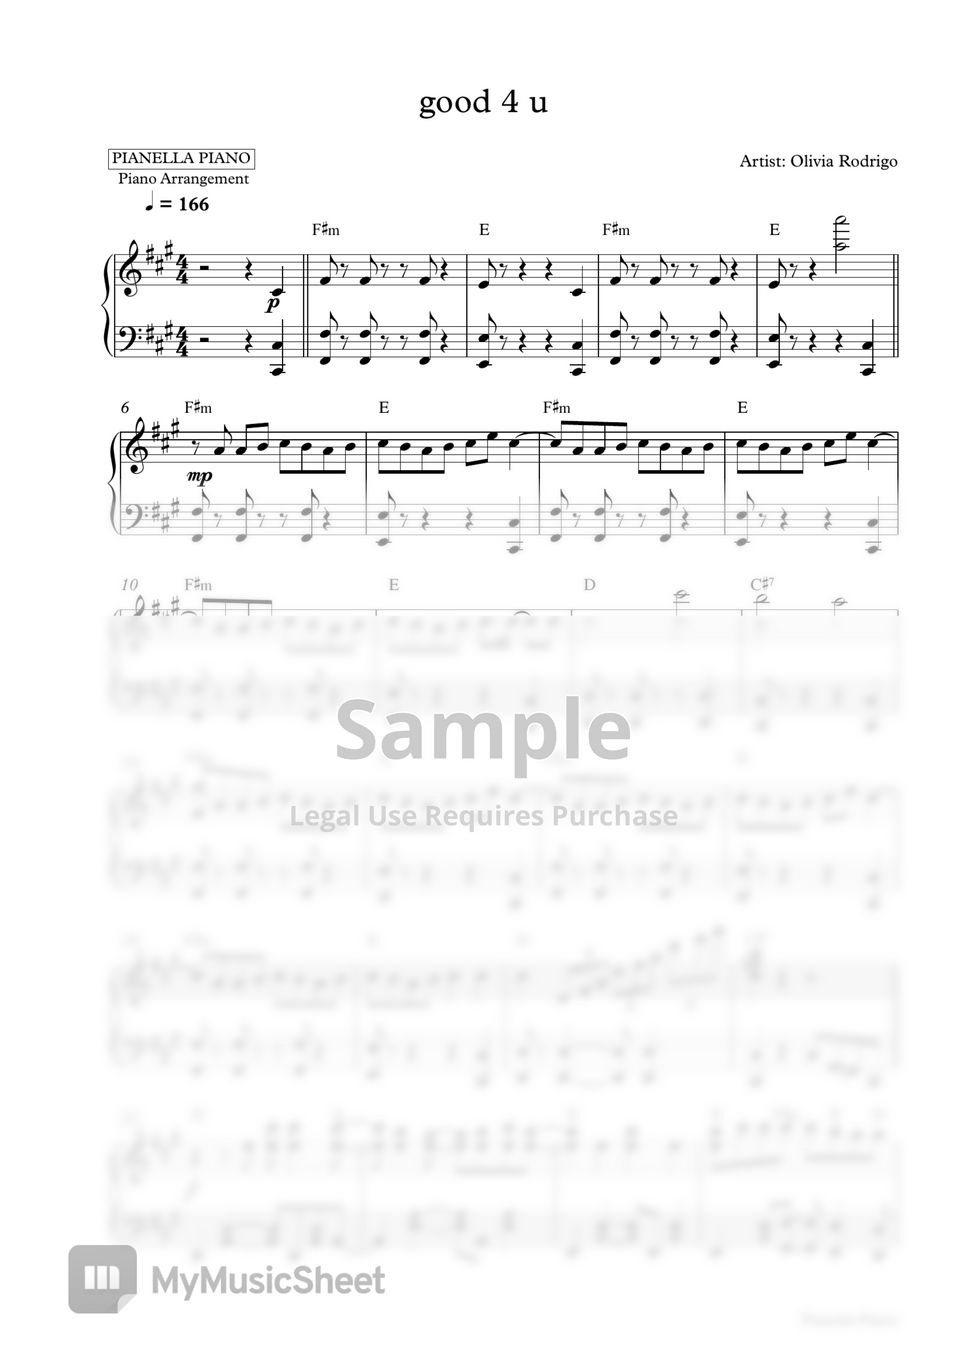 Olivia Rodrigo - good 4 u (Piano Sheet) by Pianella Piano